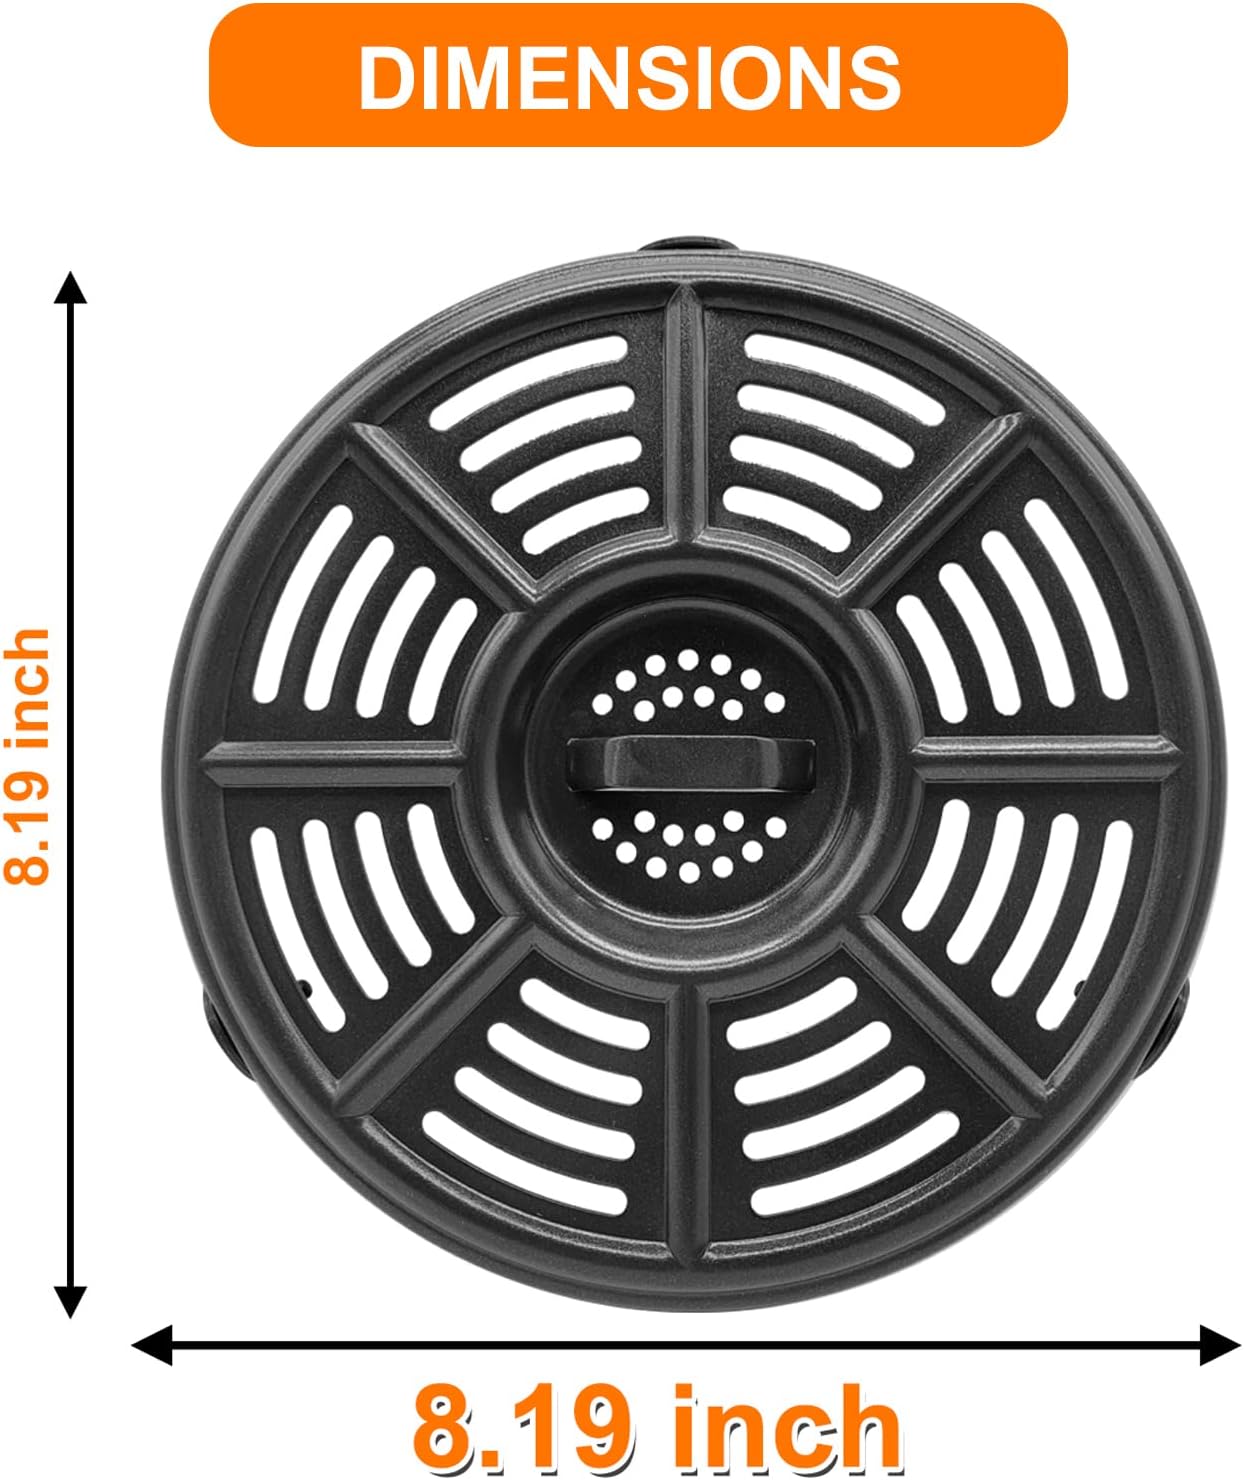 Air Fryer Replacement Tray Air Fryer Accessories Part Grill Pan Crisper  Plate for Ninja SP100 SP101B1